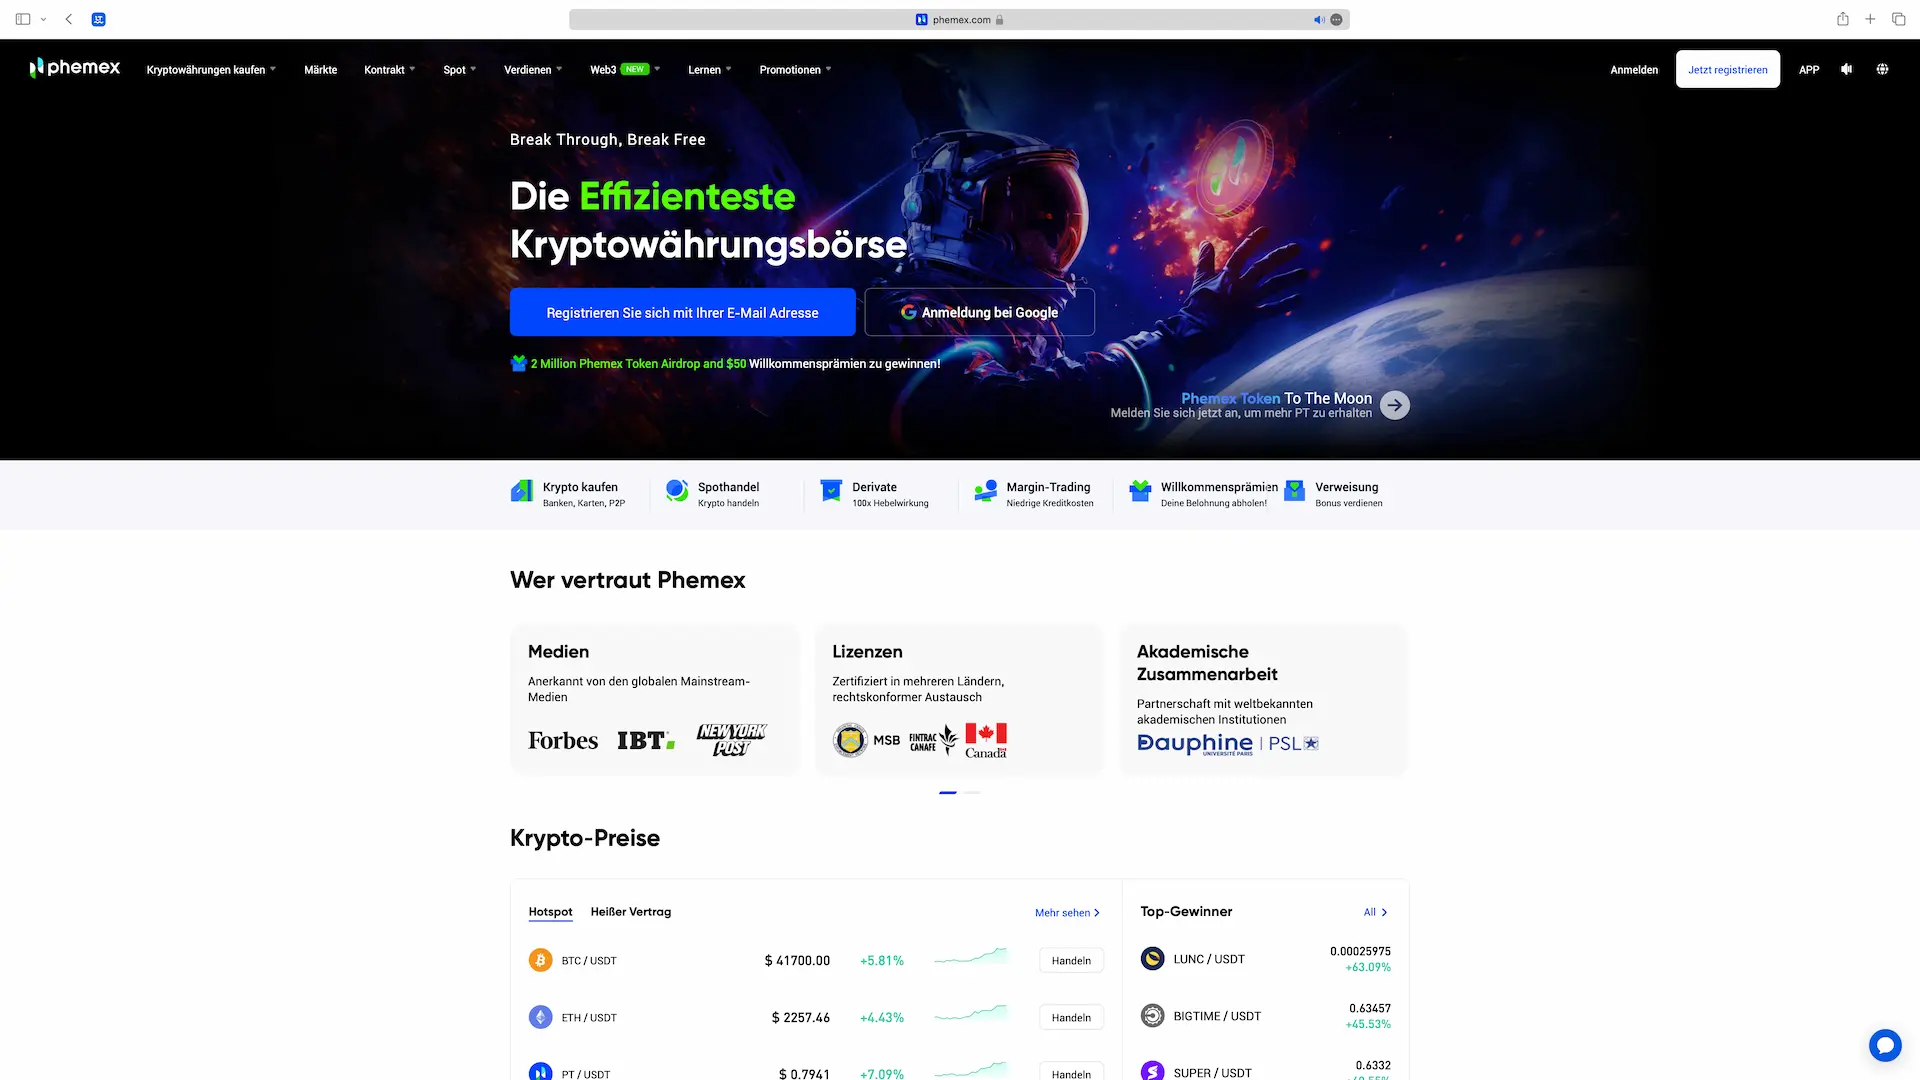 Startseite der Krypto-Trading-Plattform Phemex